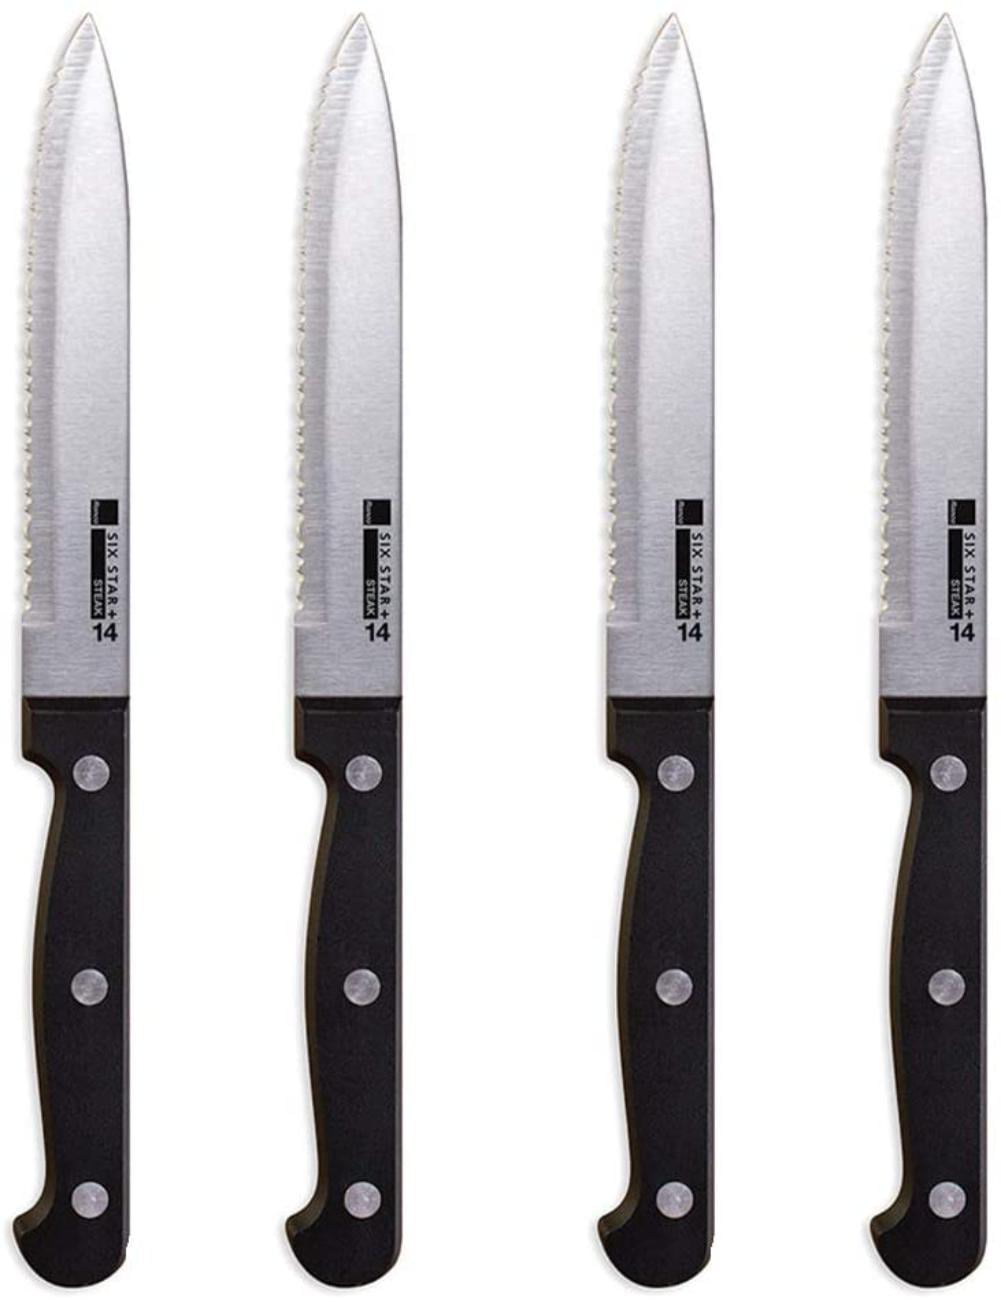 Ronco 25 Piece Steak Knife Set, Stainless Steel Serrated Blades ...